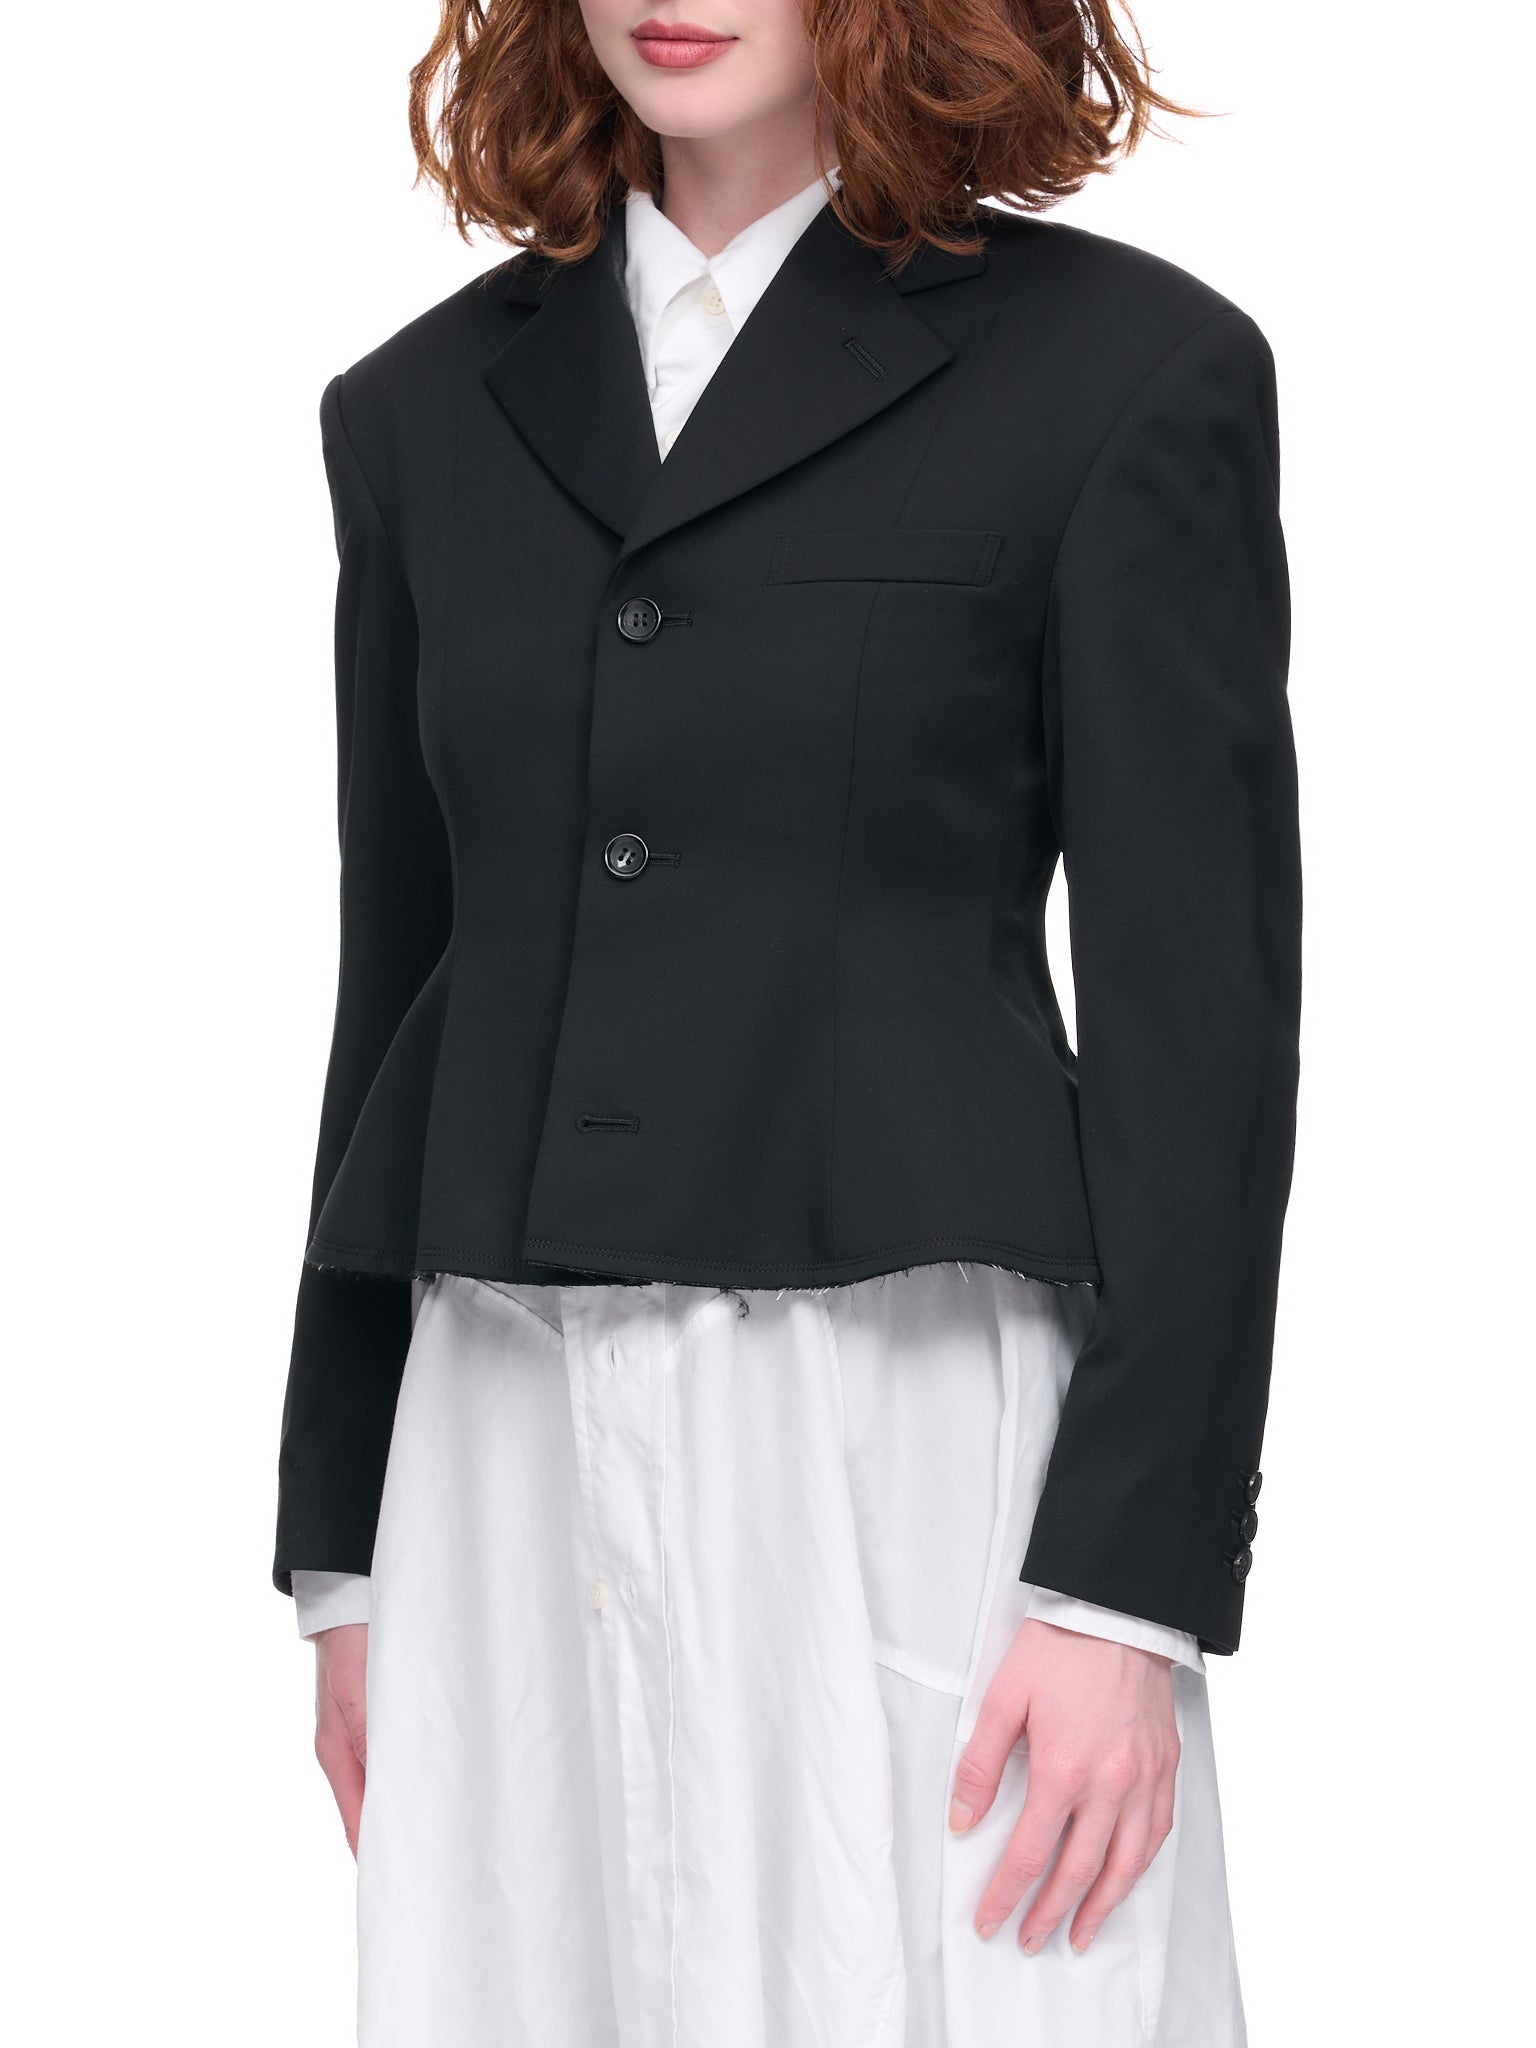 Cropped Suit Jacket (GJ-J010-051-BLACK)